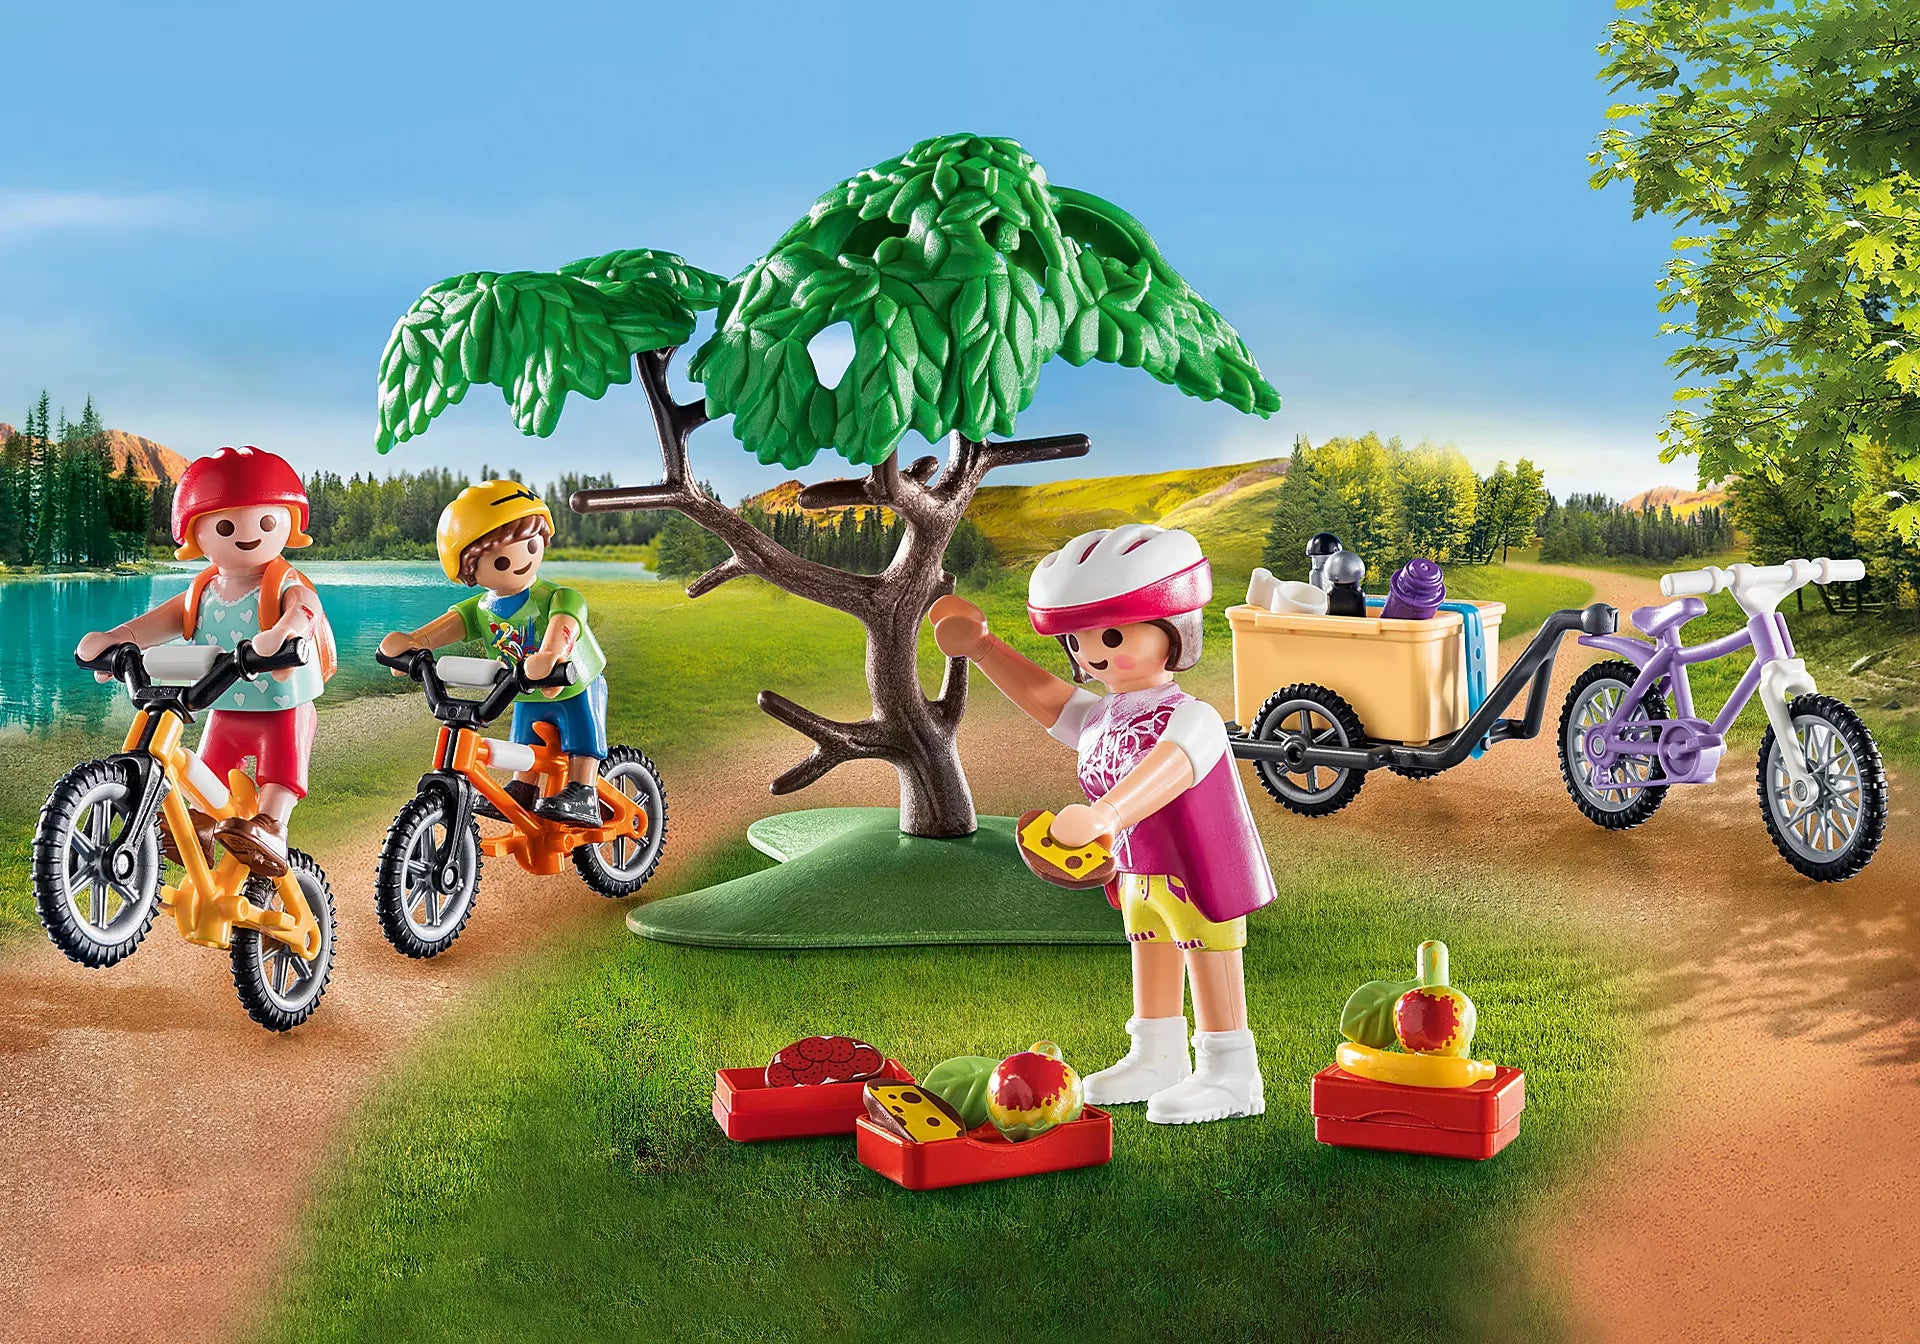 Playmobil Family Fun Bike Tour